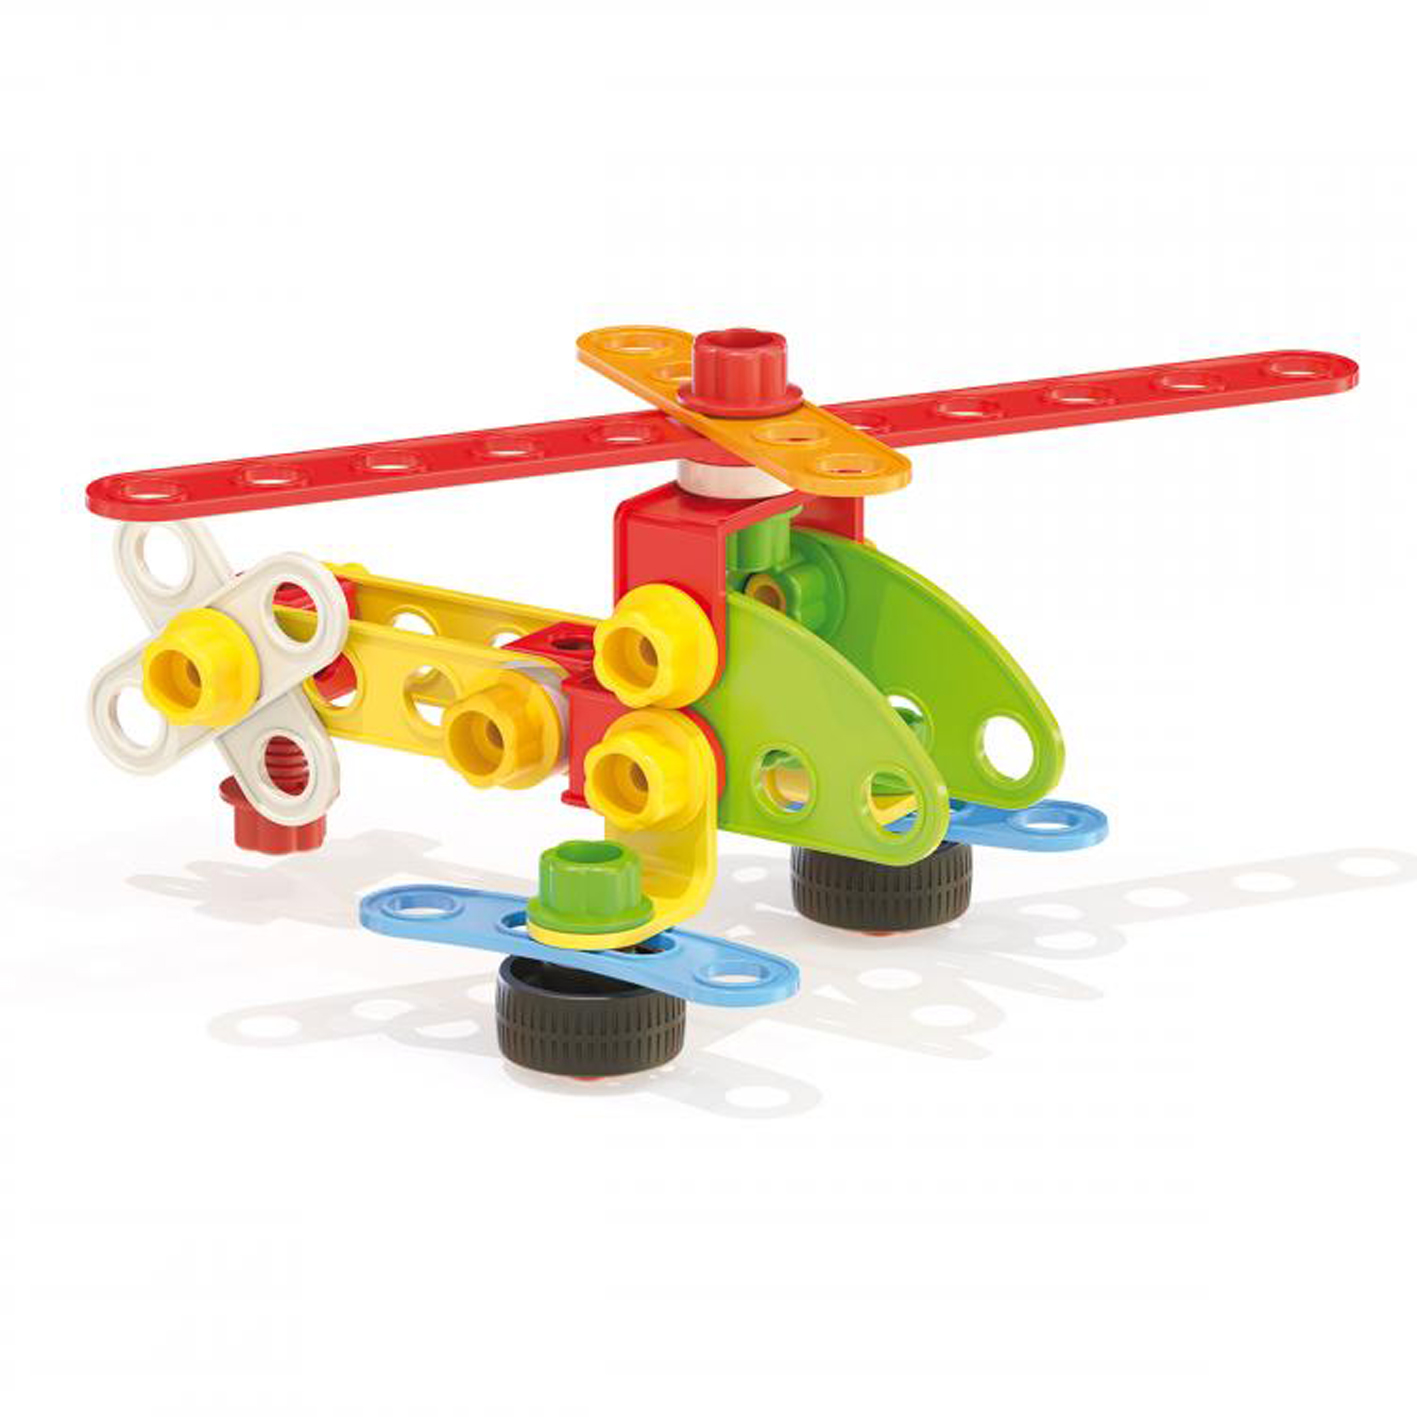 Construction toys quercetti aeroplane